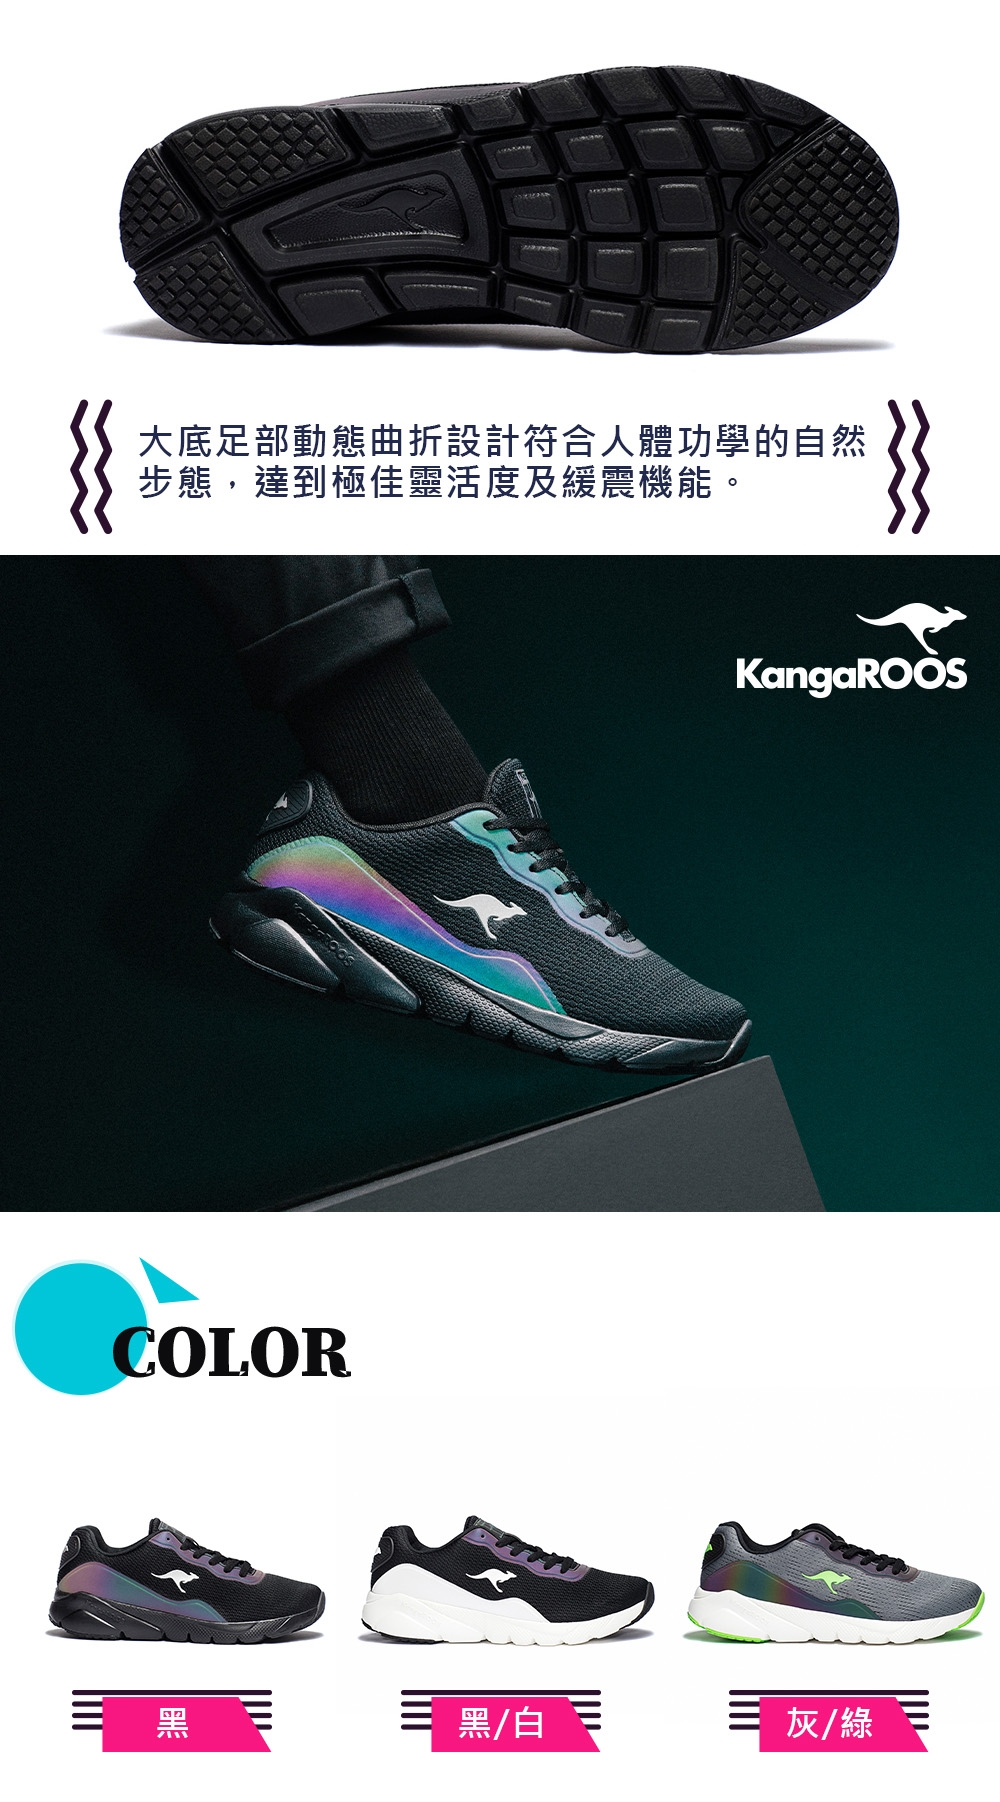 KANGAROOS RUN SWIFT 科技幻彩跑鞋(黑)